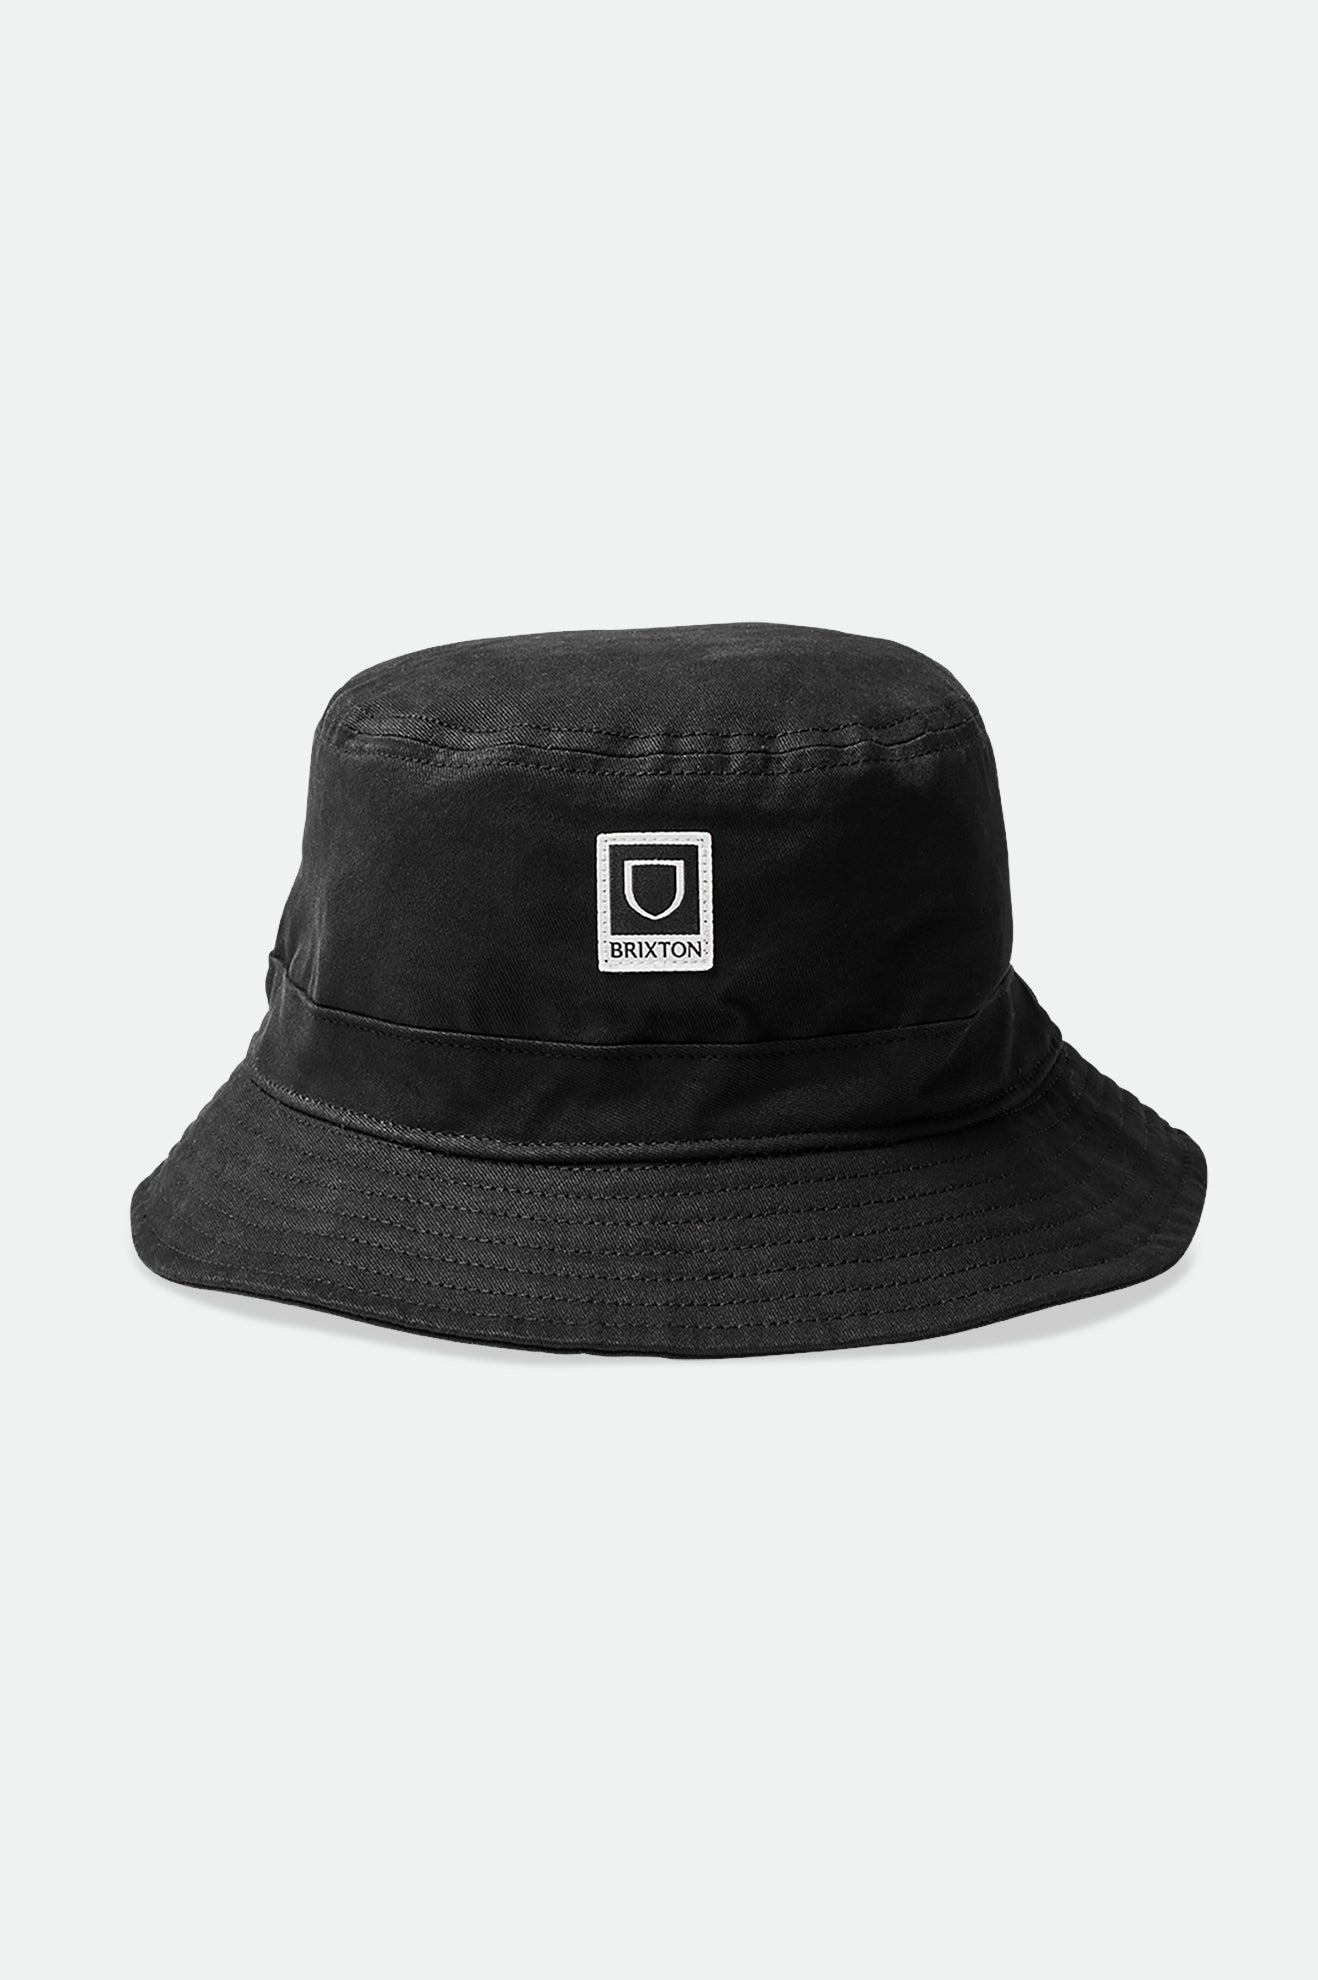 Brixton - Beta Black Packable Bucket Hat - S/M